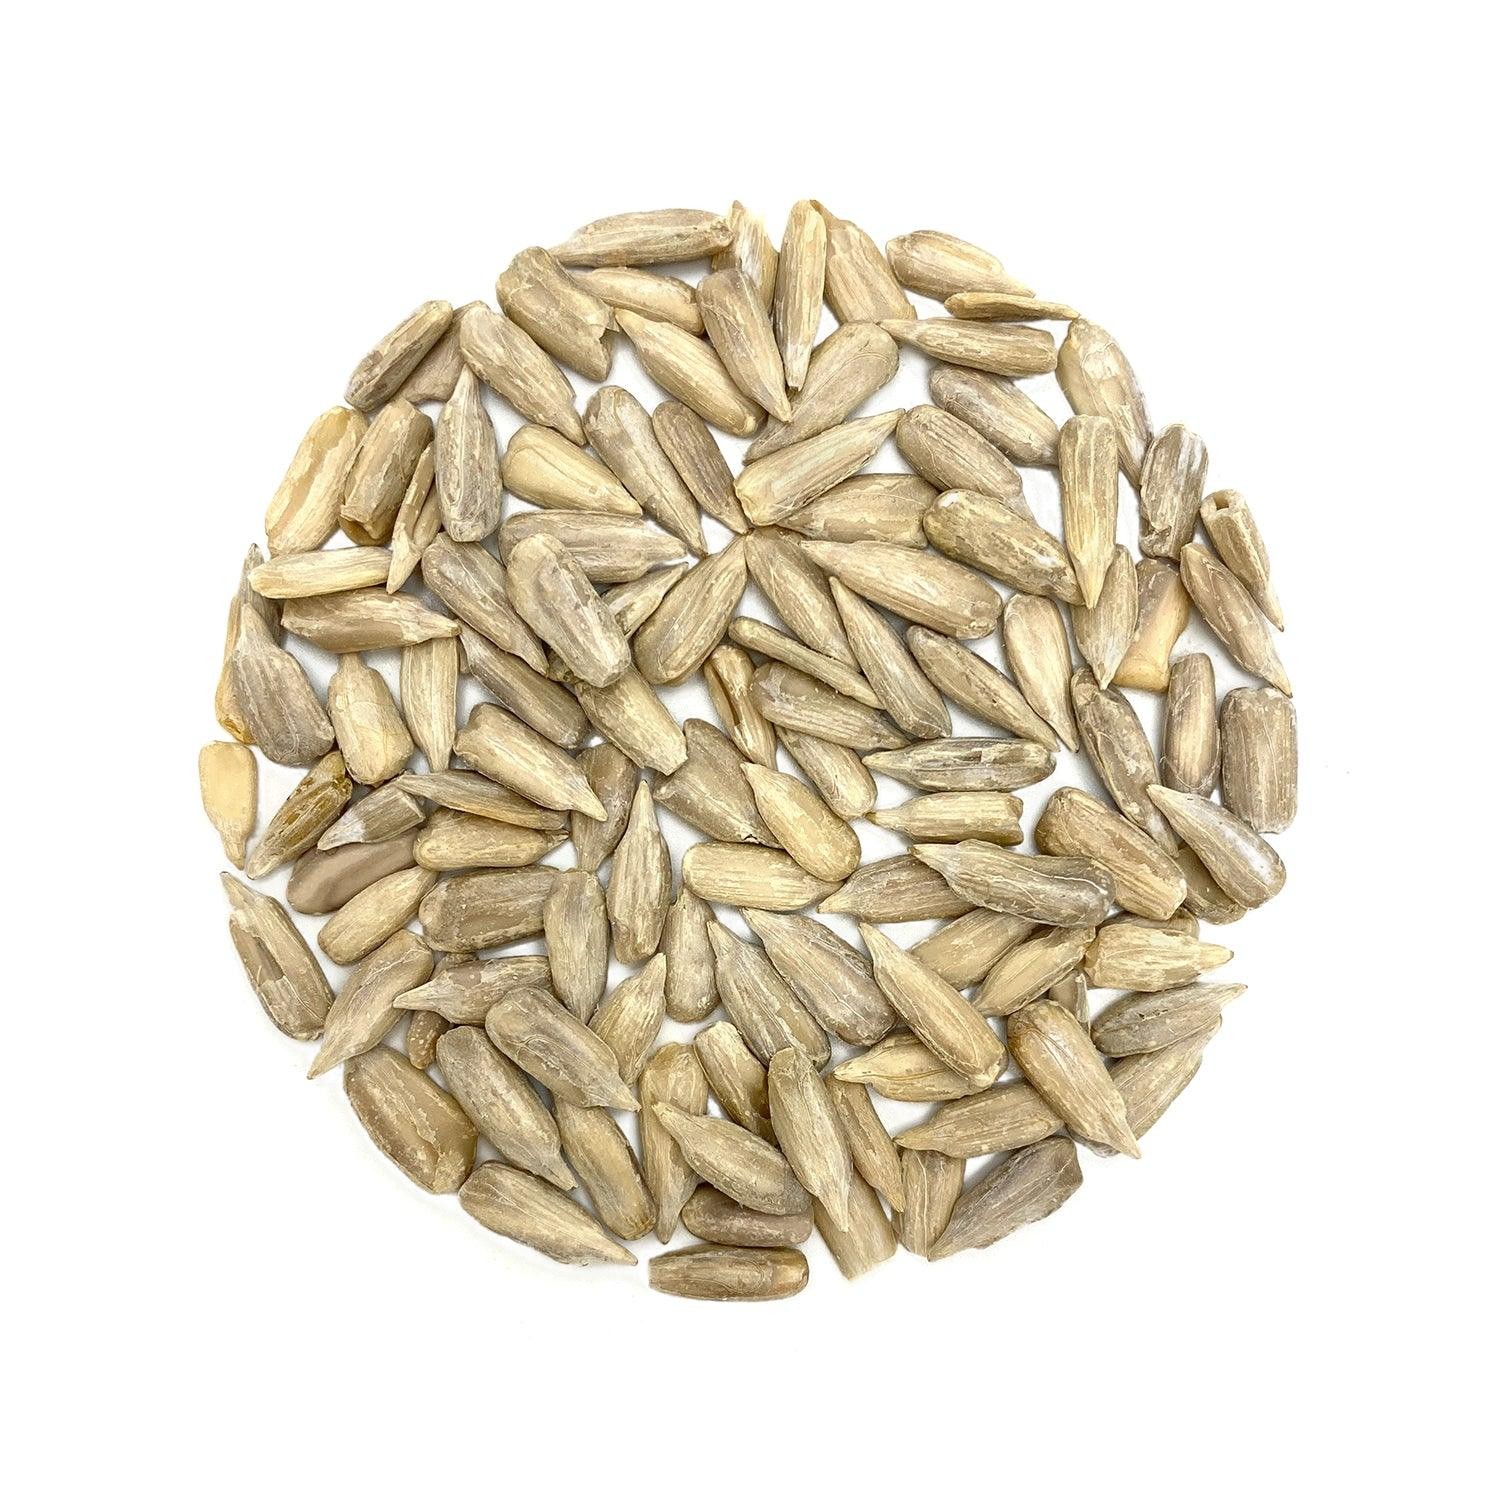 Sunflower seeds: vegan cheese ingredients